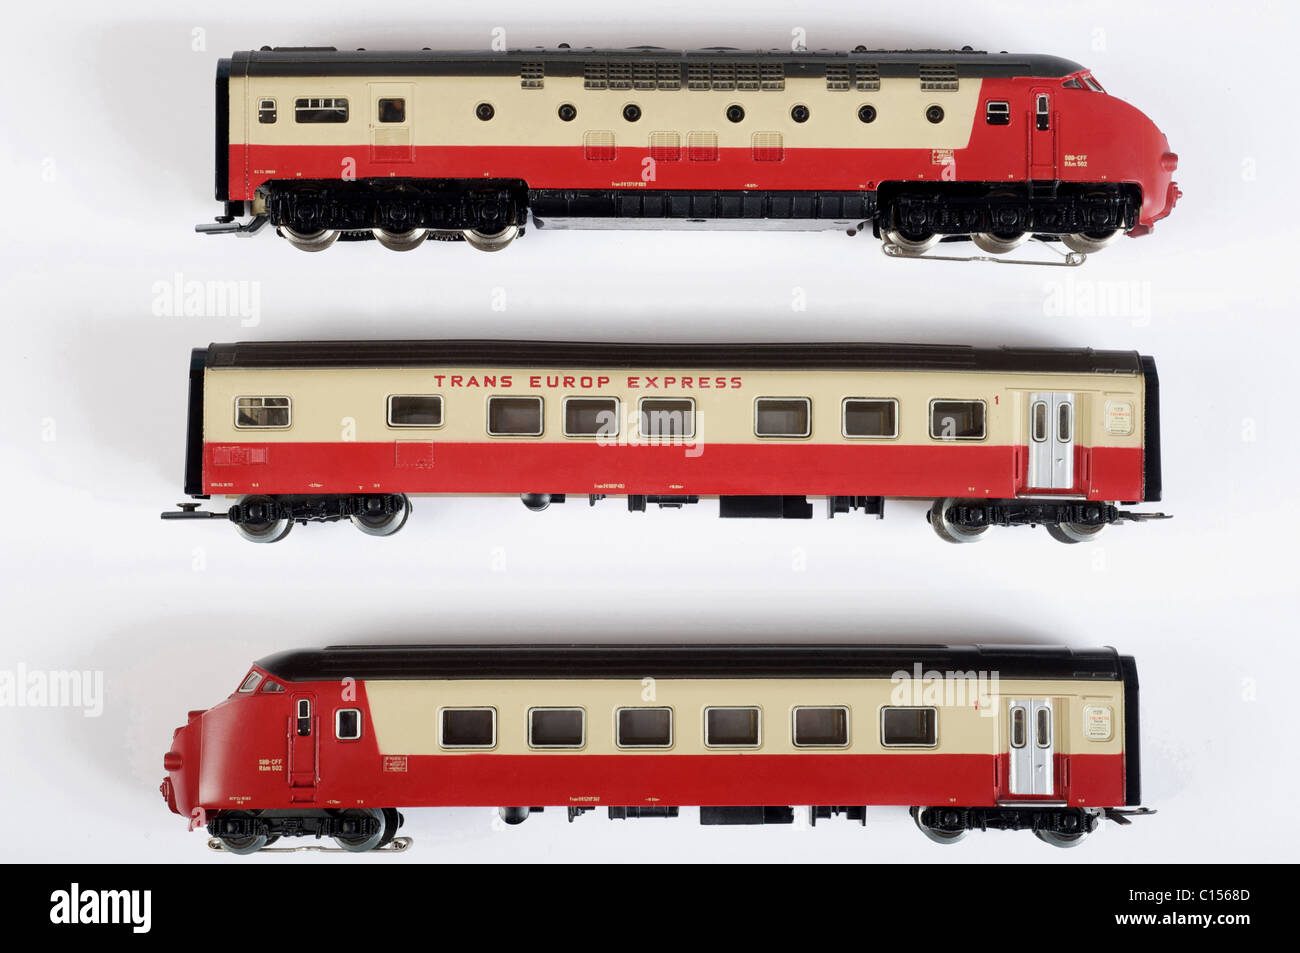 Je zal beter worden Prestatie Bonus Marklin Trans Europe Express (TEE) model train set Stock Photo - Alamy